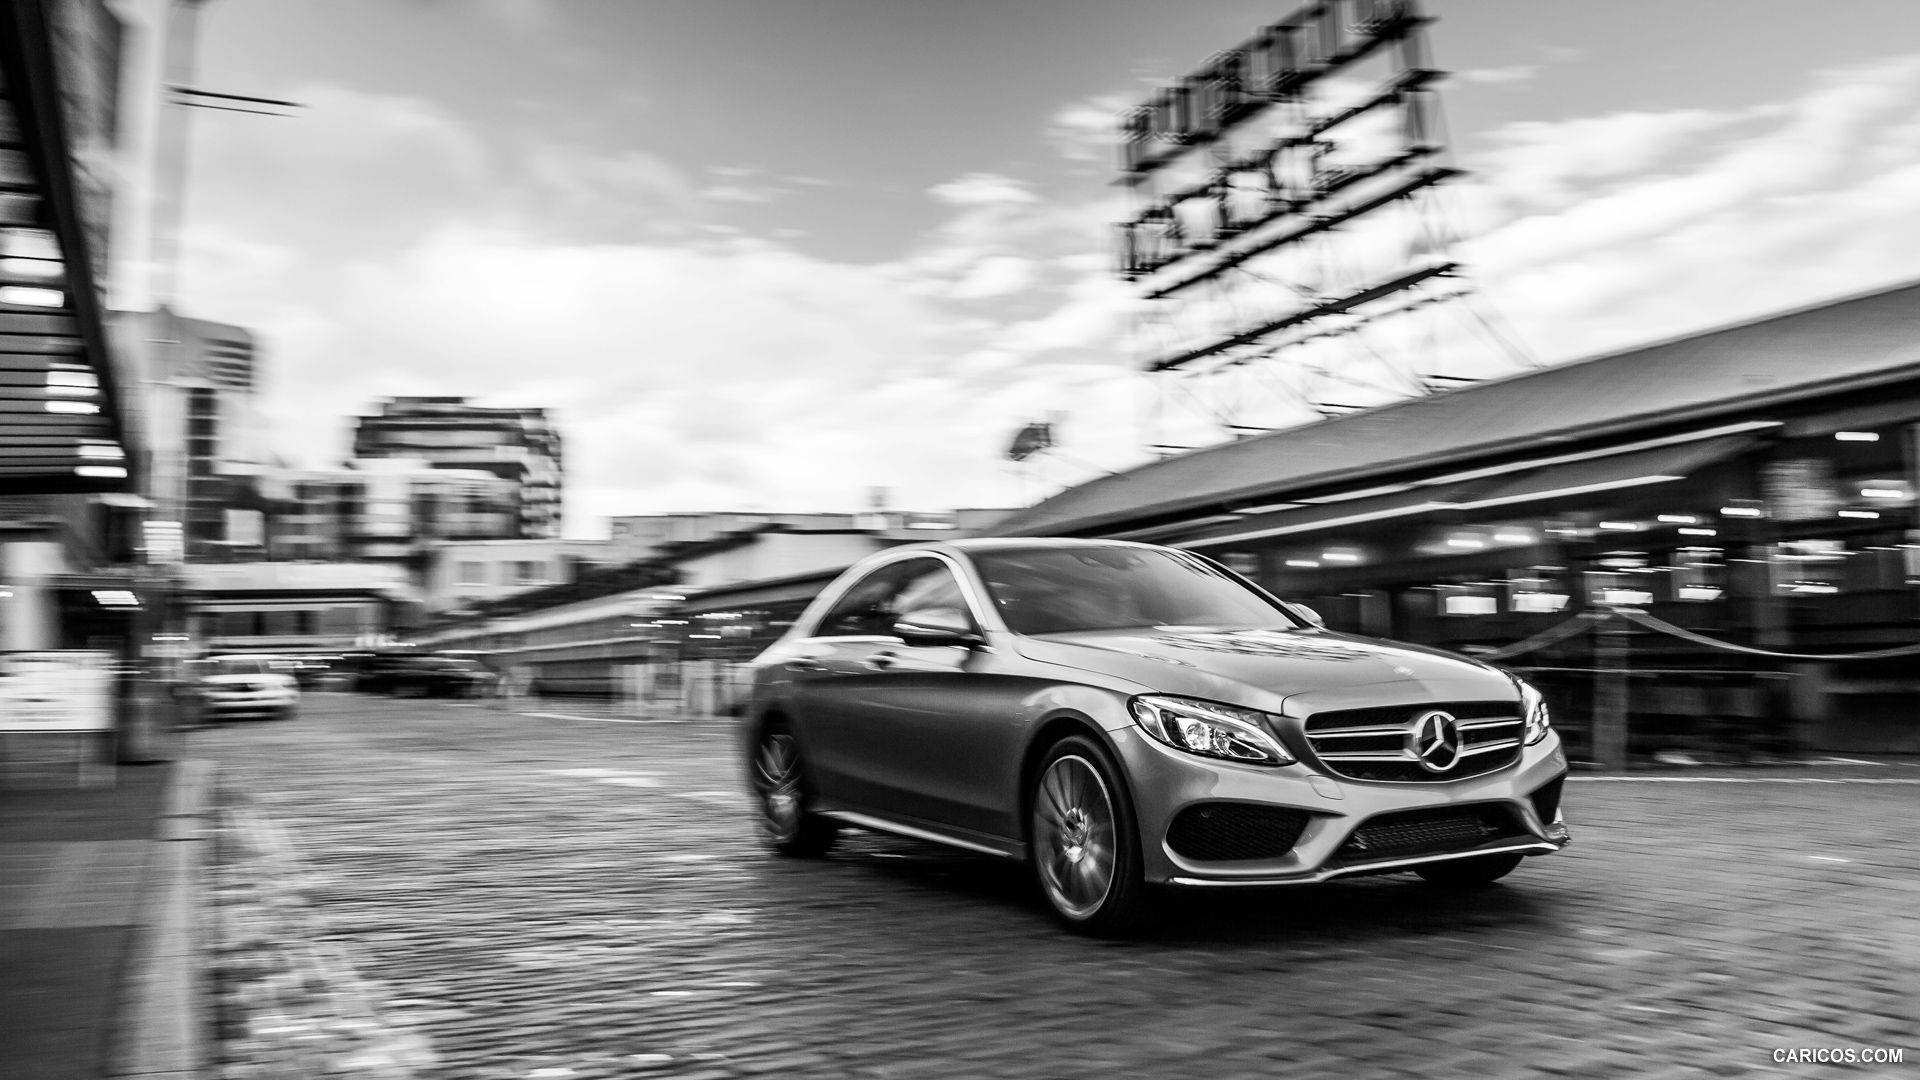 Sleek Mercedes Benz C300 With A Striking City Backdrop Background